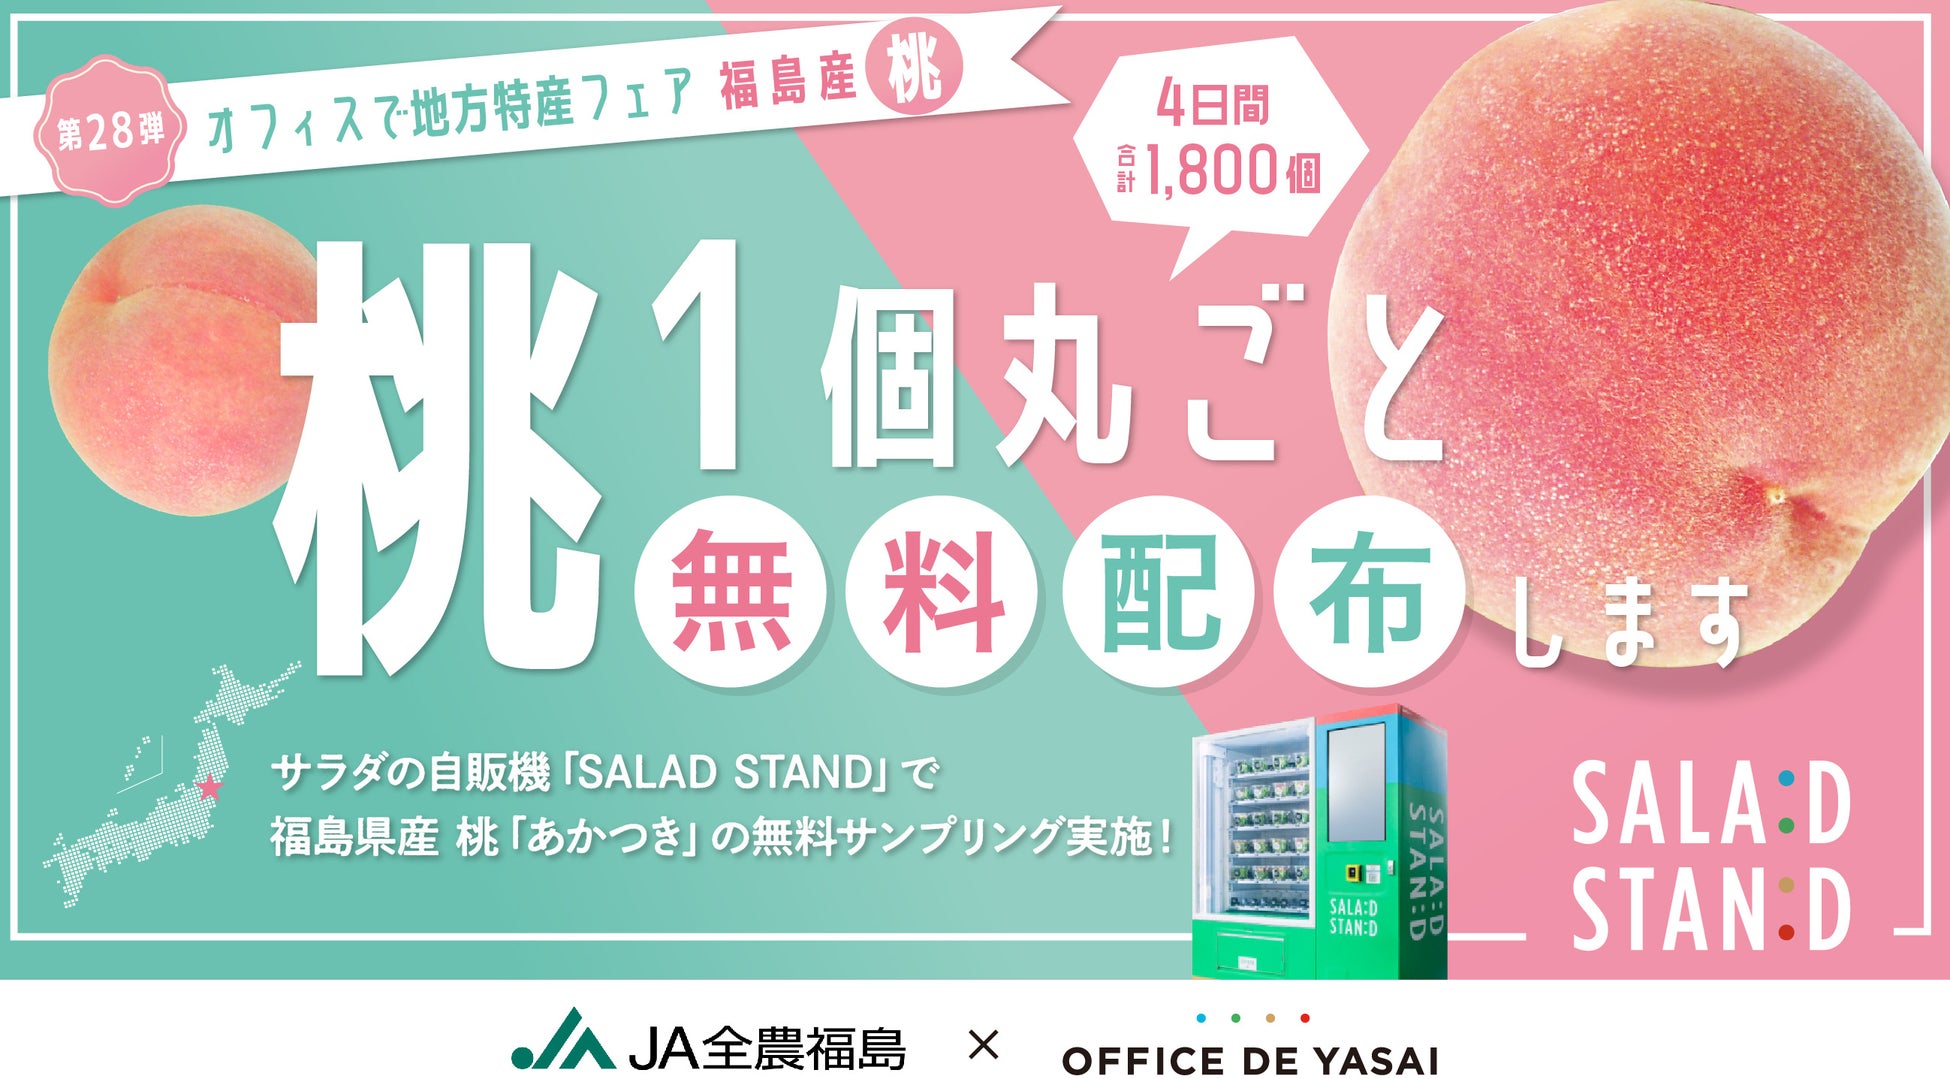 OFFICE DE YASAI、渋谷駅で福島県産の桃を1個丸ごと無料配布！〜サラダの自販機「SALAD STAND」内で、4日間合計1,800名様に〜